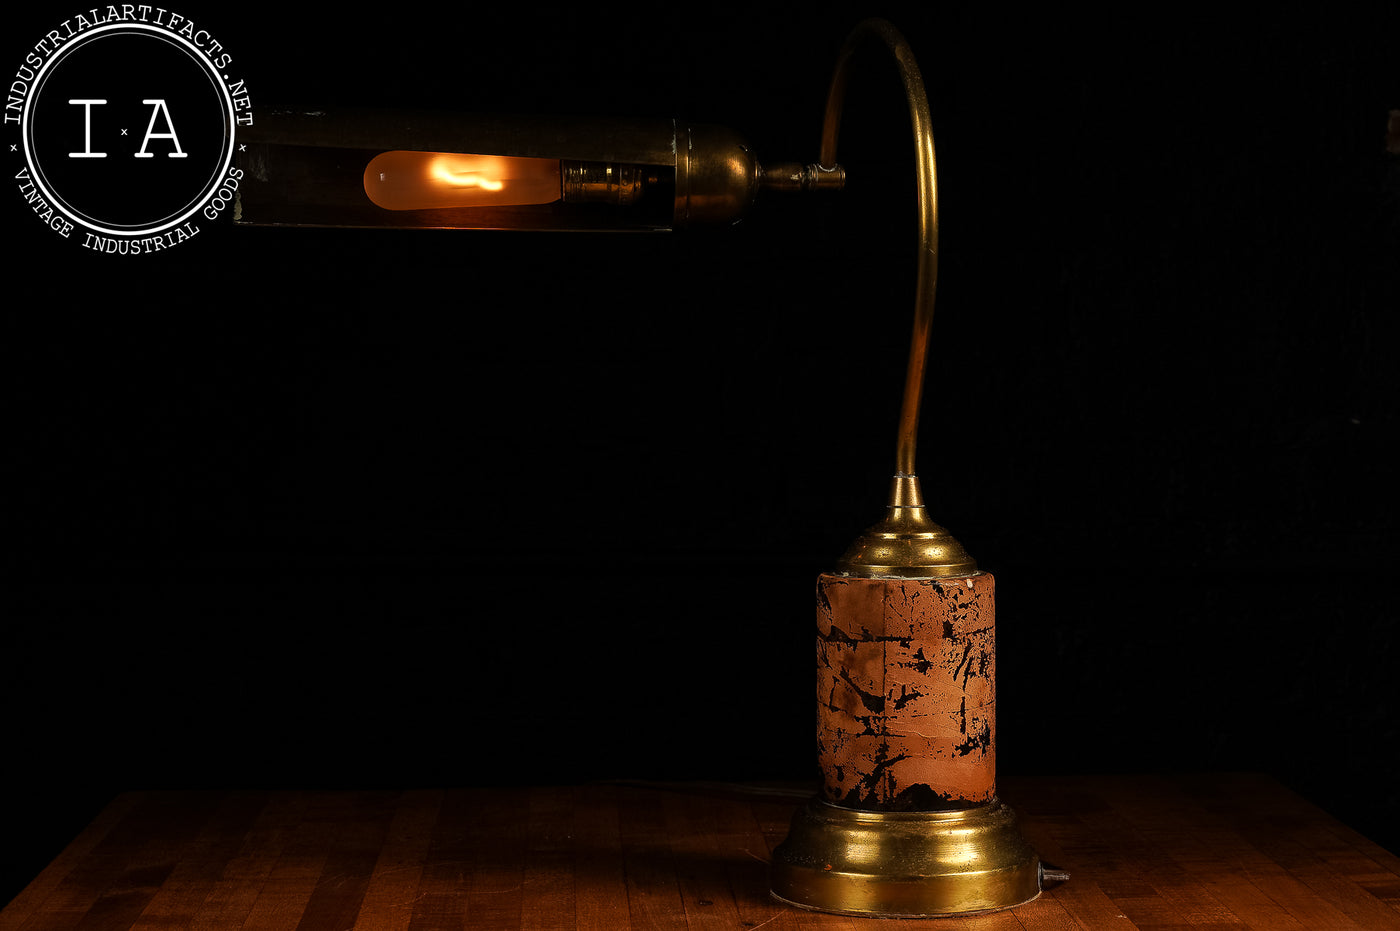 c. 1950 Hollywood Regency Brass Banker's Lamp